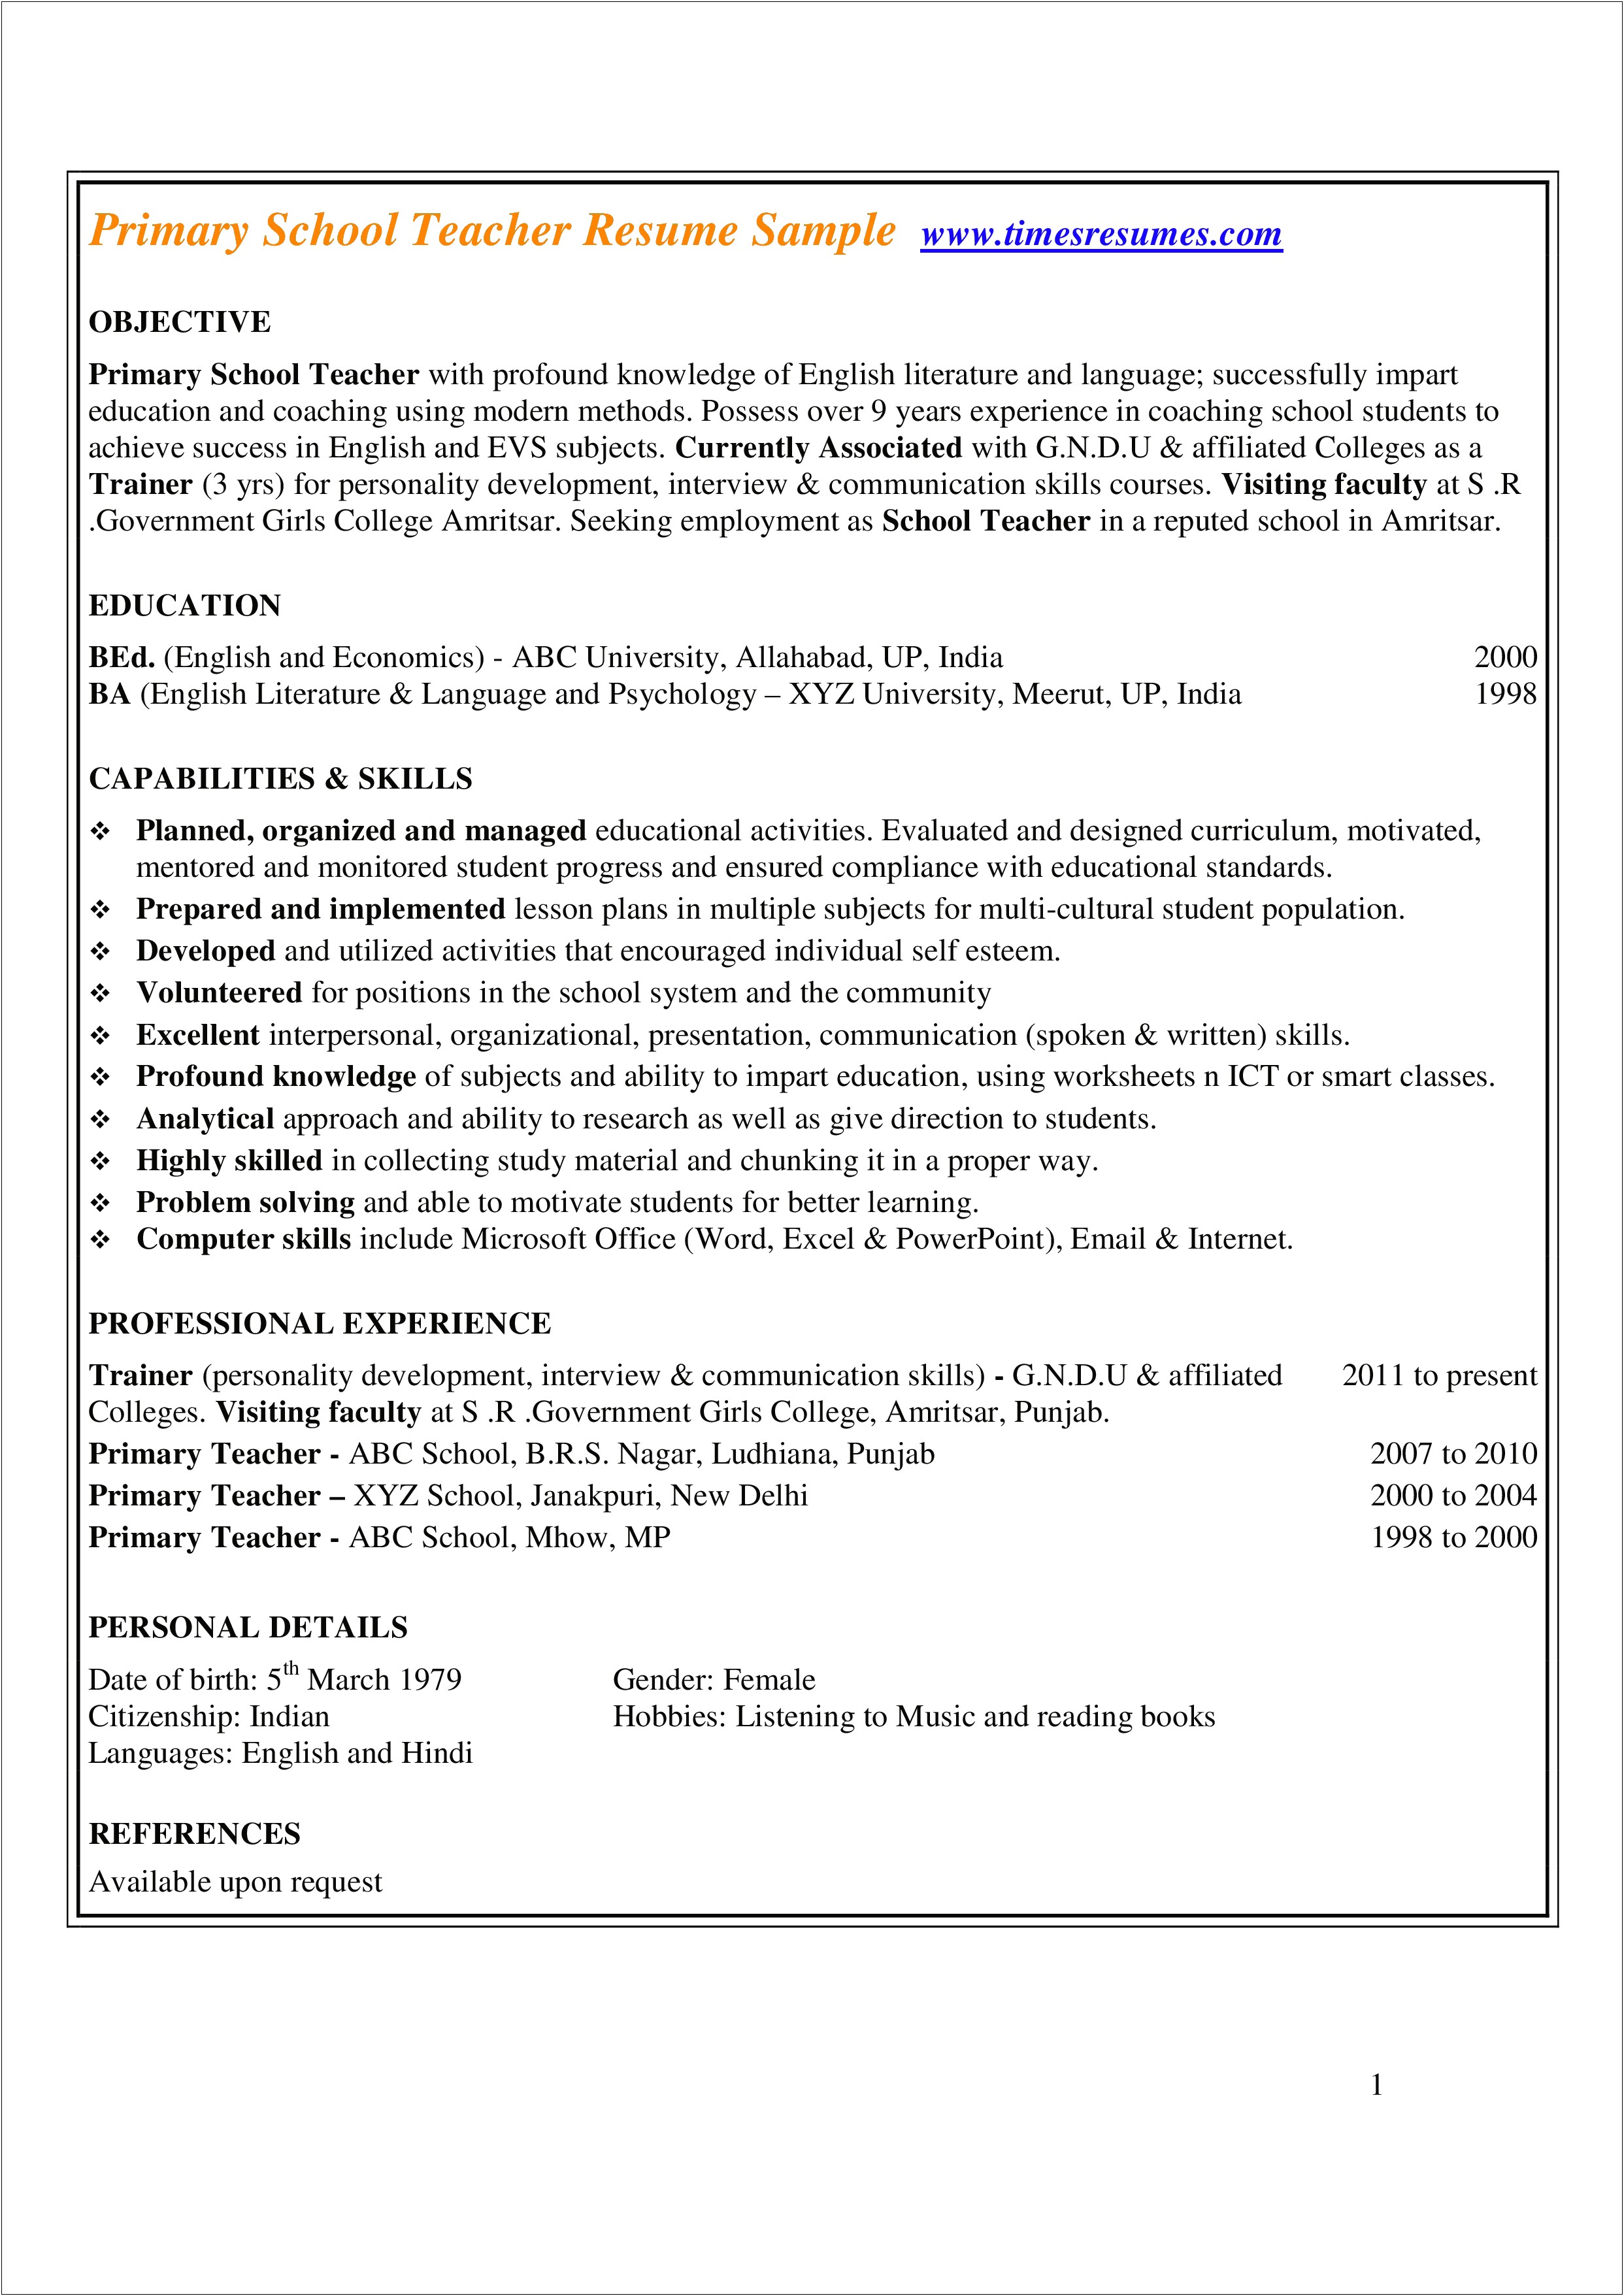 Resume Format For Primary Teacher Job In India